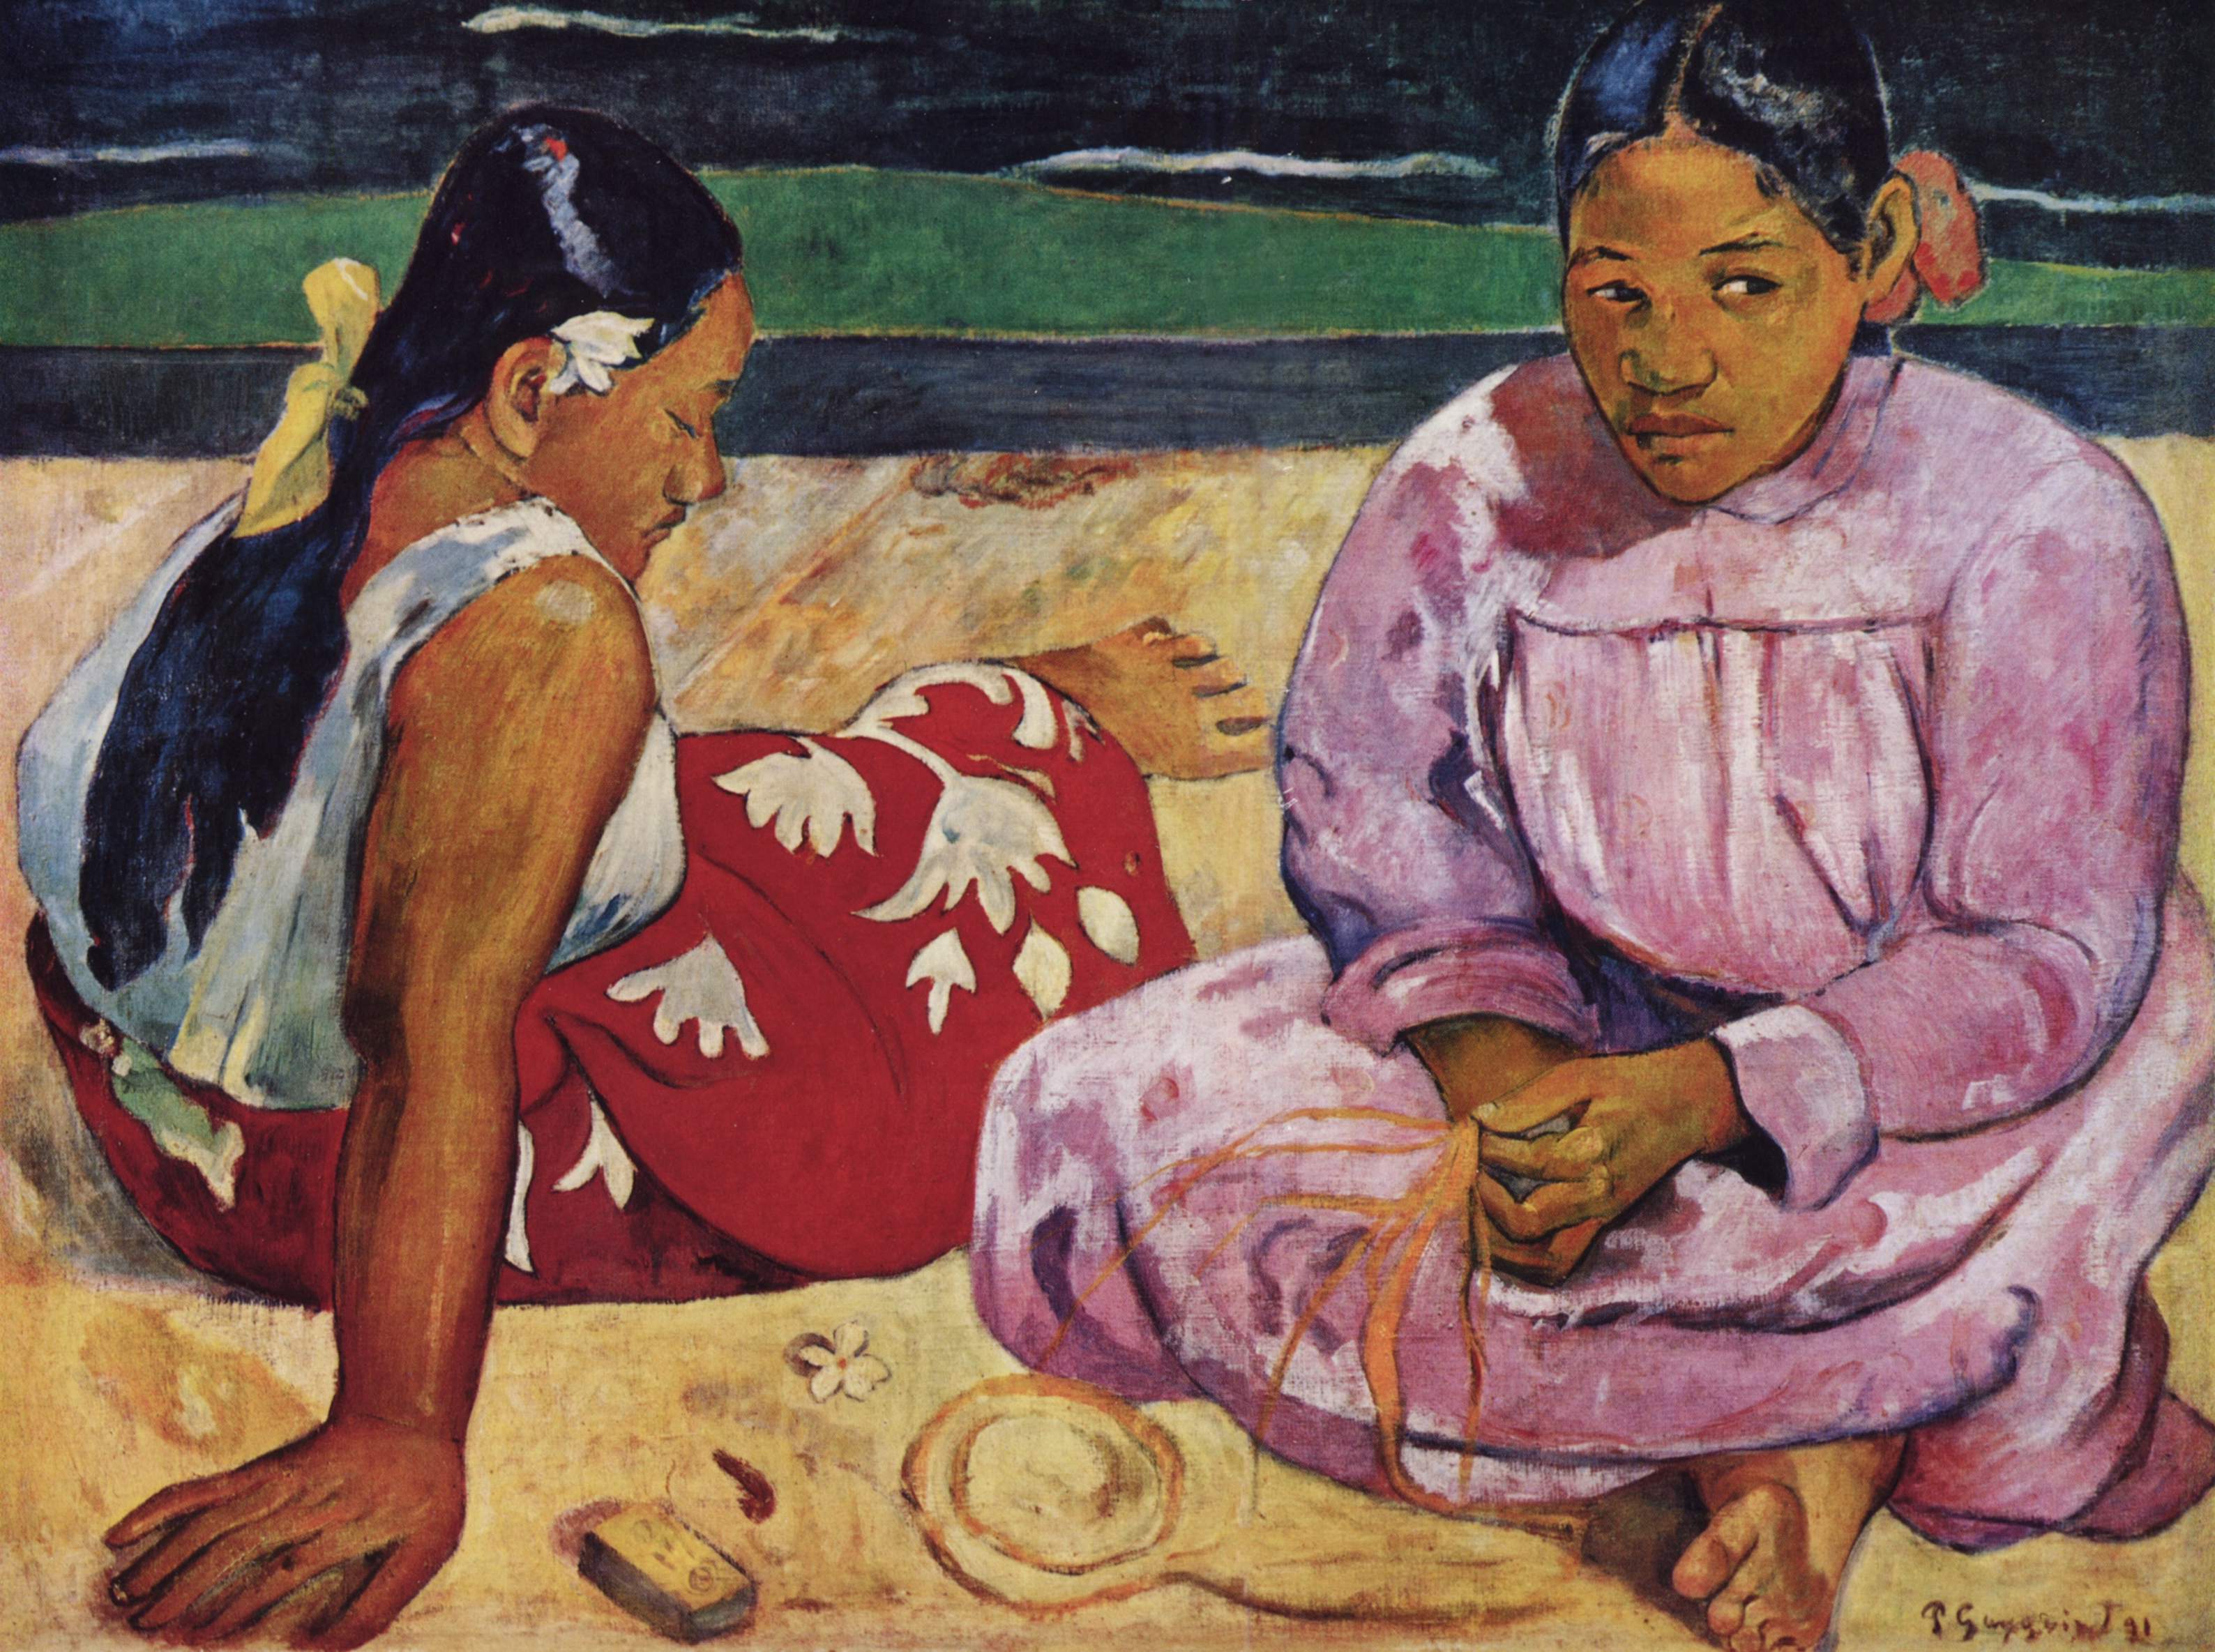 Frauen von Tahiti am Strand by Paul Gauguin - 1891 - 69 cm × 91 cm Musée d'Orsay